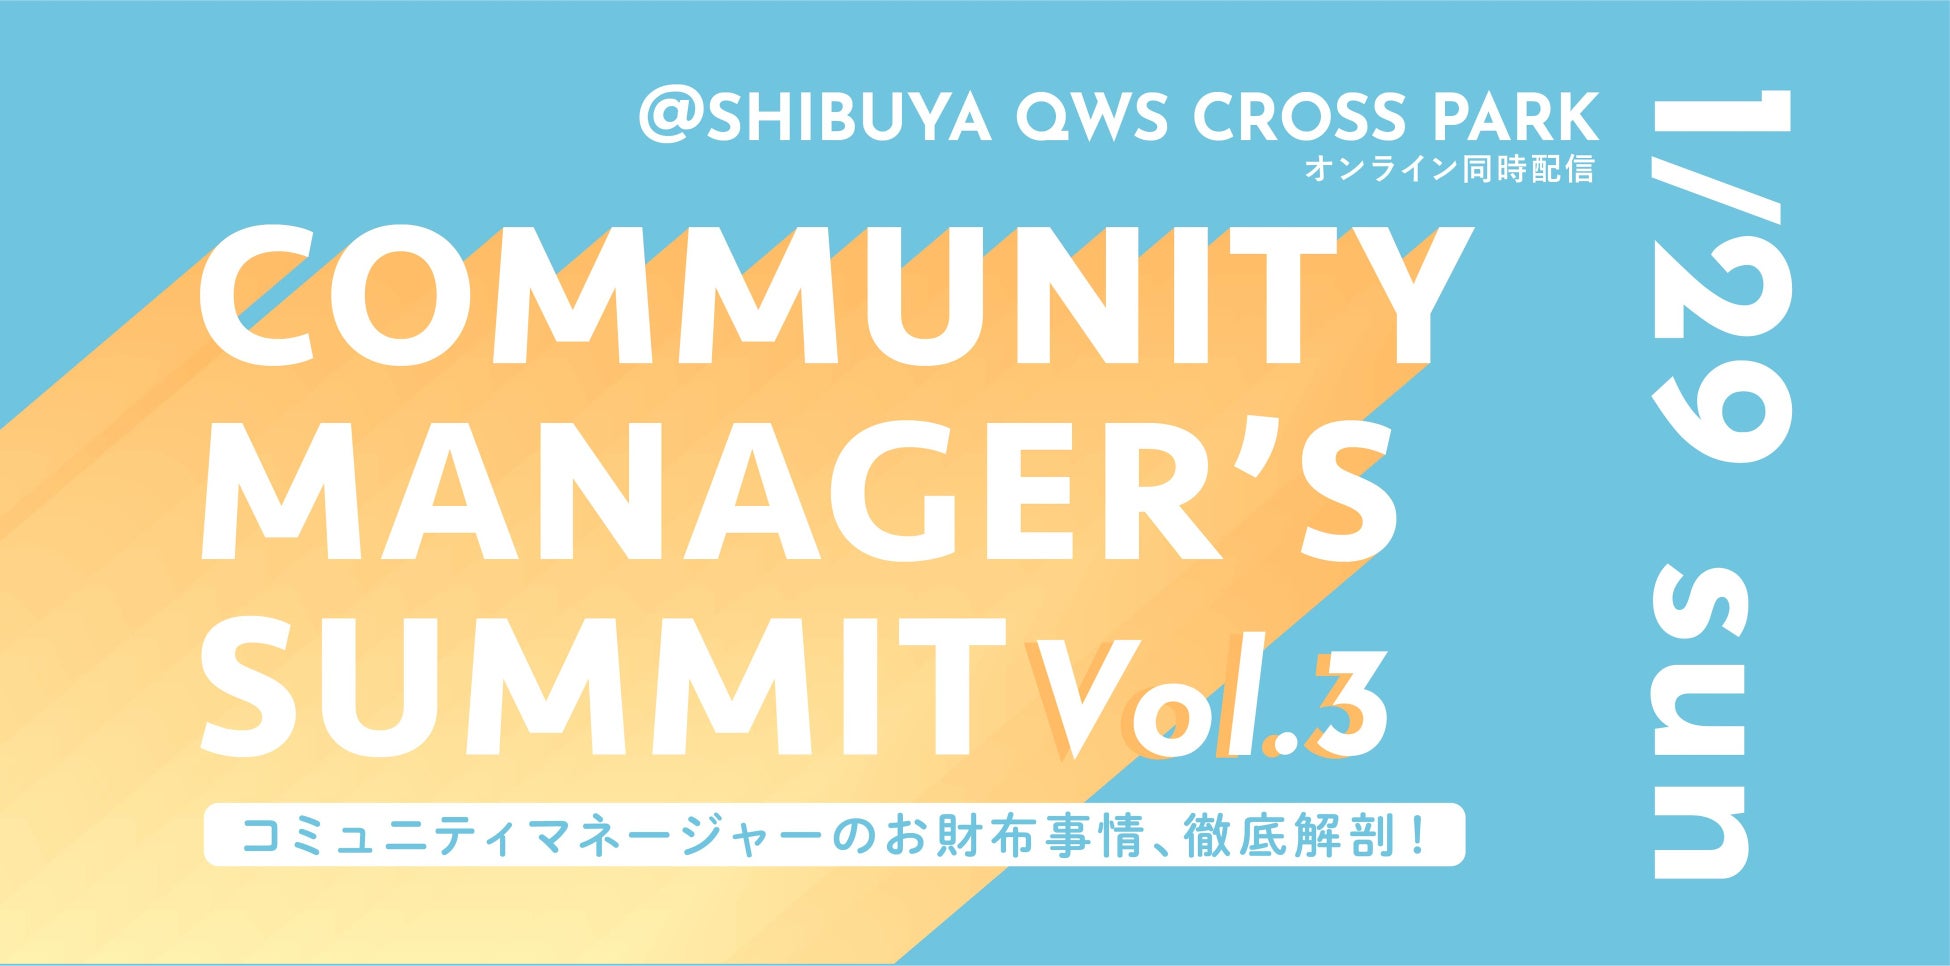 「COMMUNITY MANAGER'S SUMMIT Vol.3」へqutori代表 加藤が登壇のサブ画像1